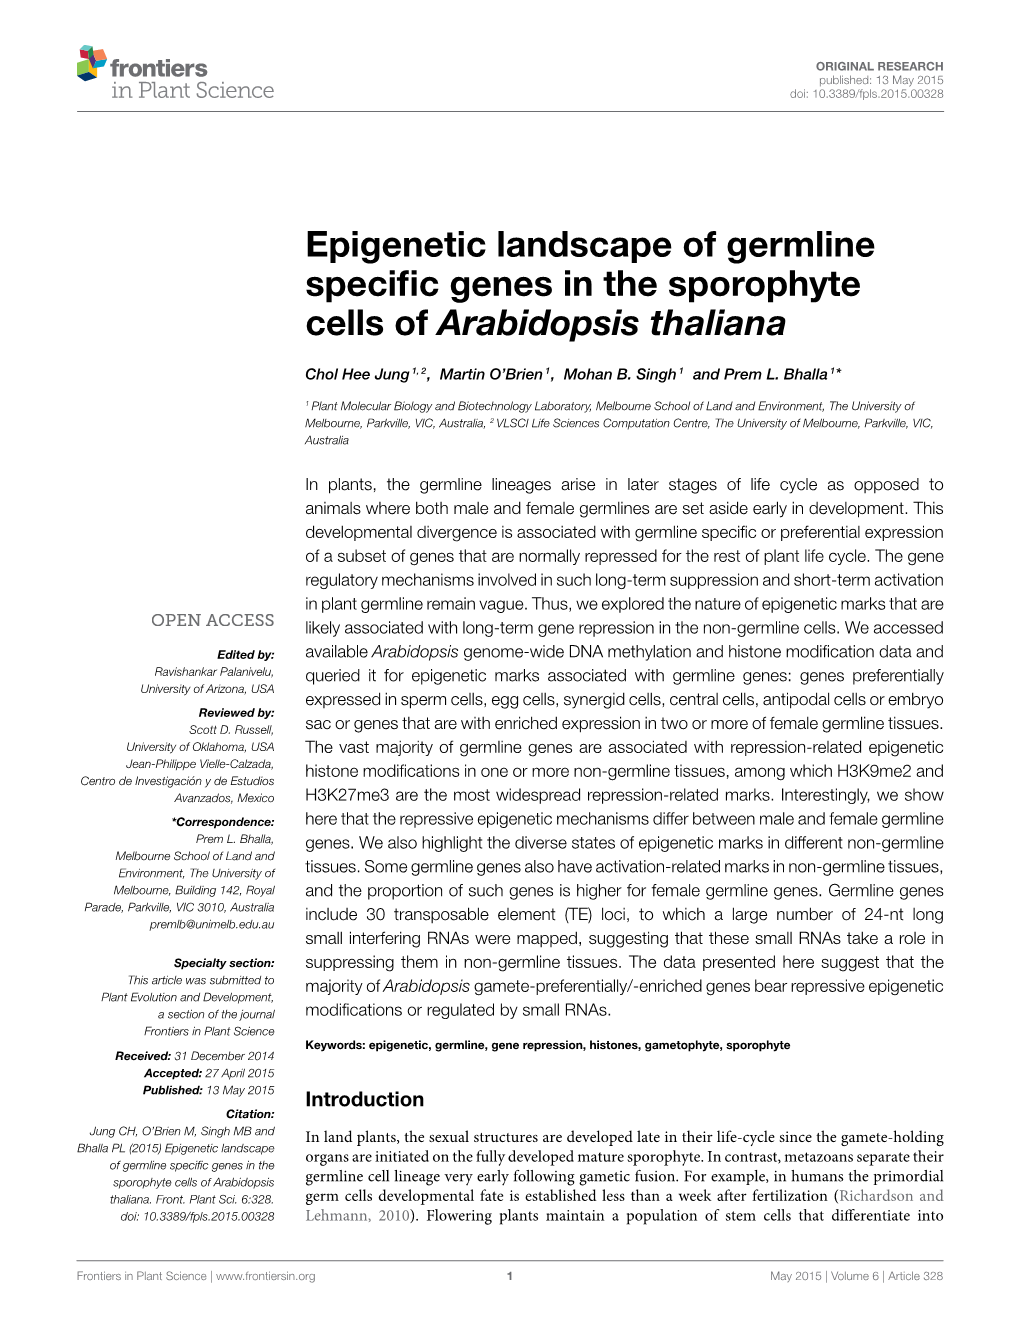 Epigenetic Landscape of Germline Specific Genes in the Sporophyte Cells of Arabidopsis Thaliana